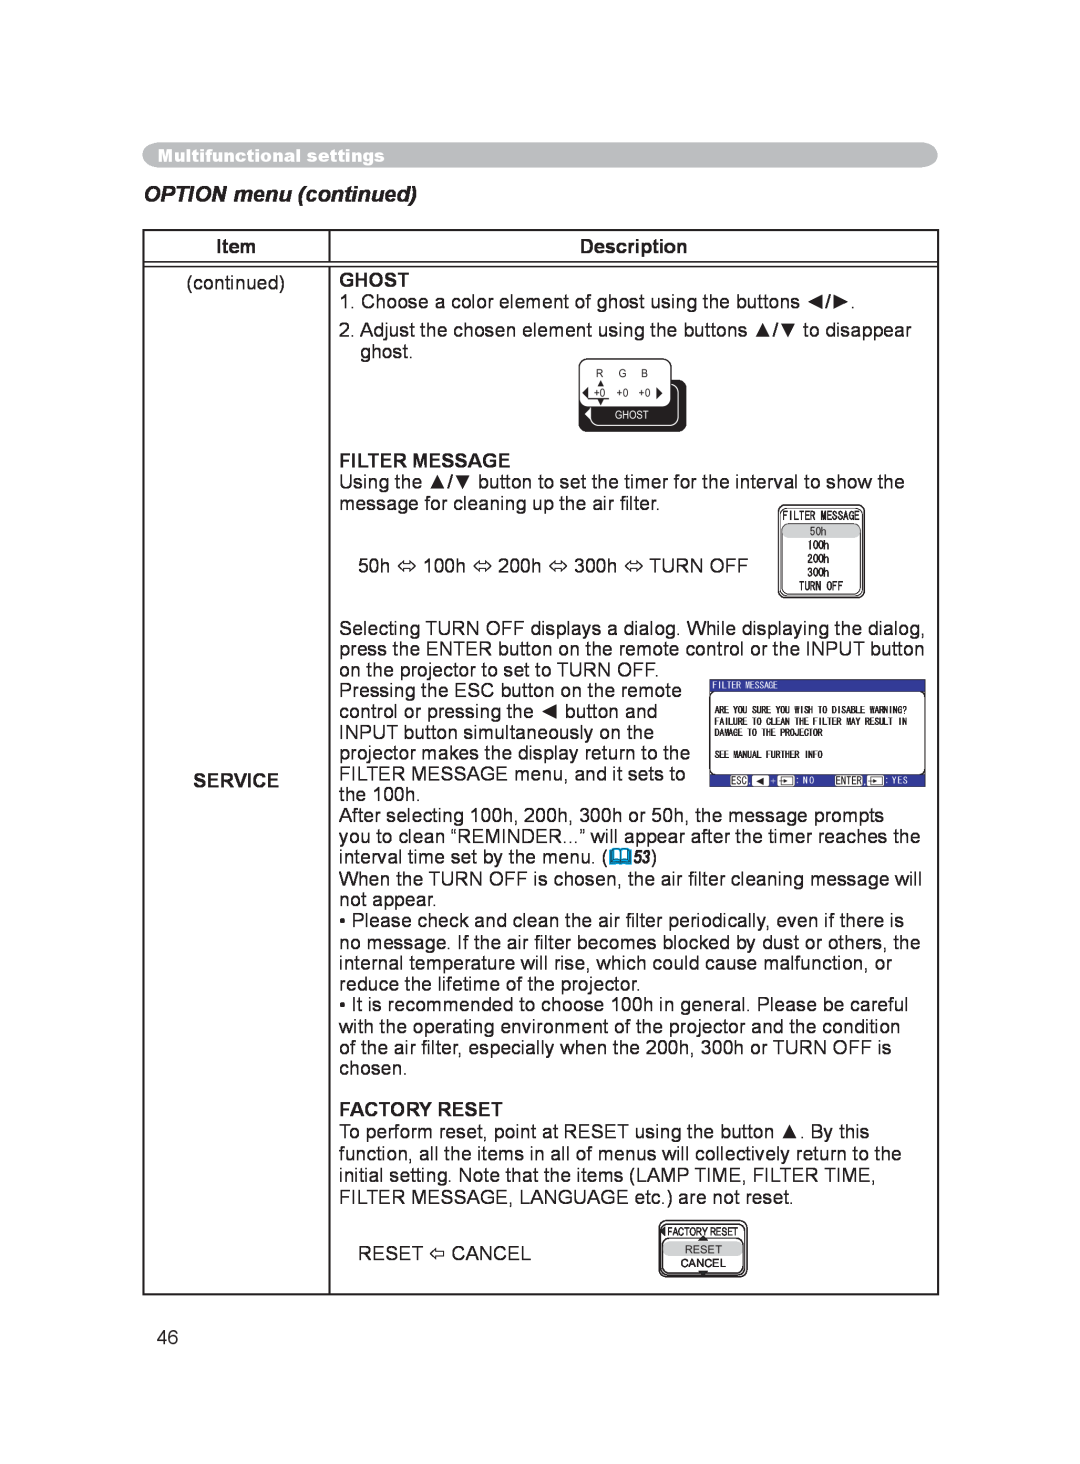 Hitachi EDPJ32 user manual OPTION menu continued, 50h  100h  200h  300h  TURN OFF, Ghost 